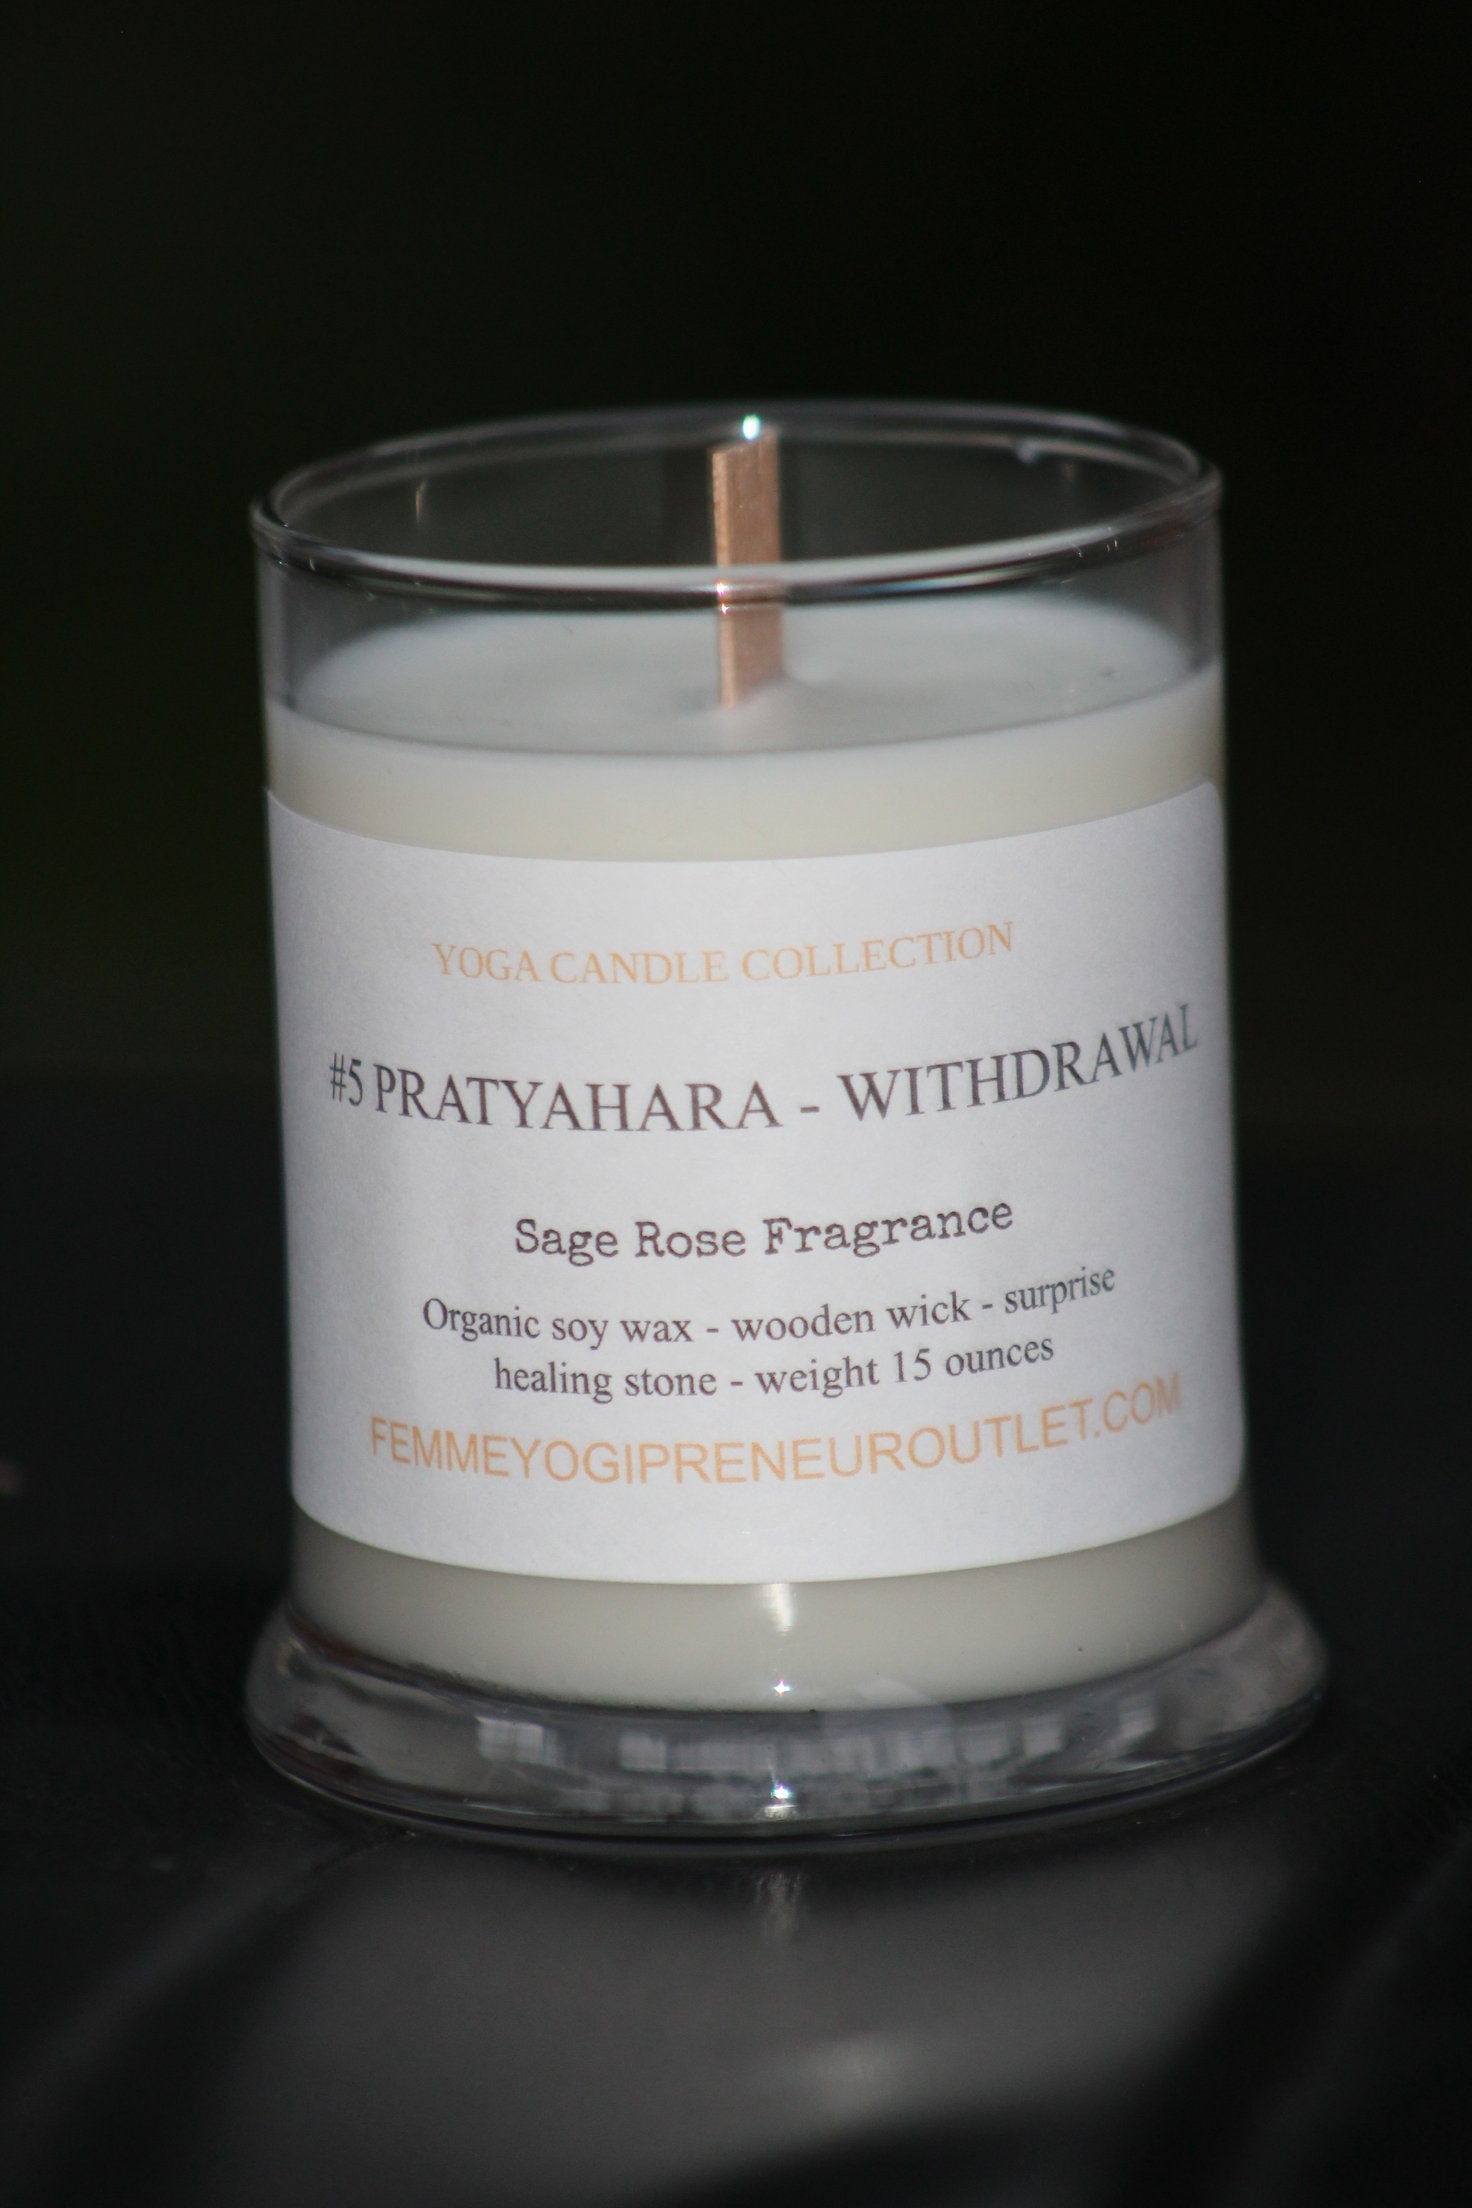 Pratyahara - Withdrawal (Yoga practice candle)